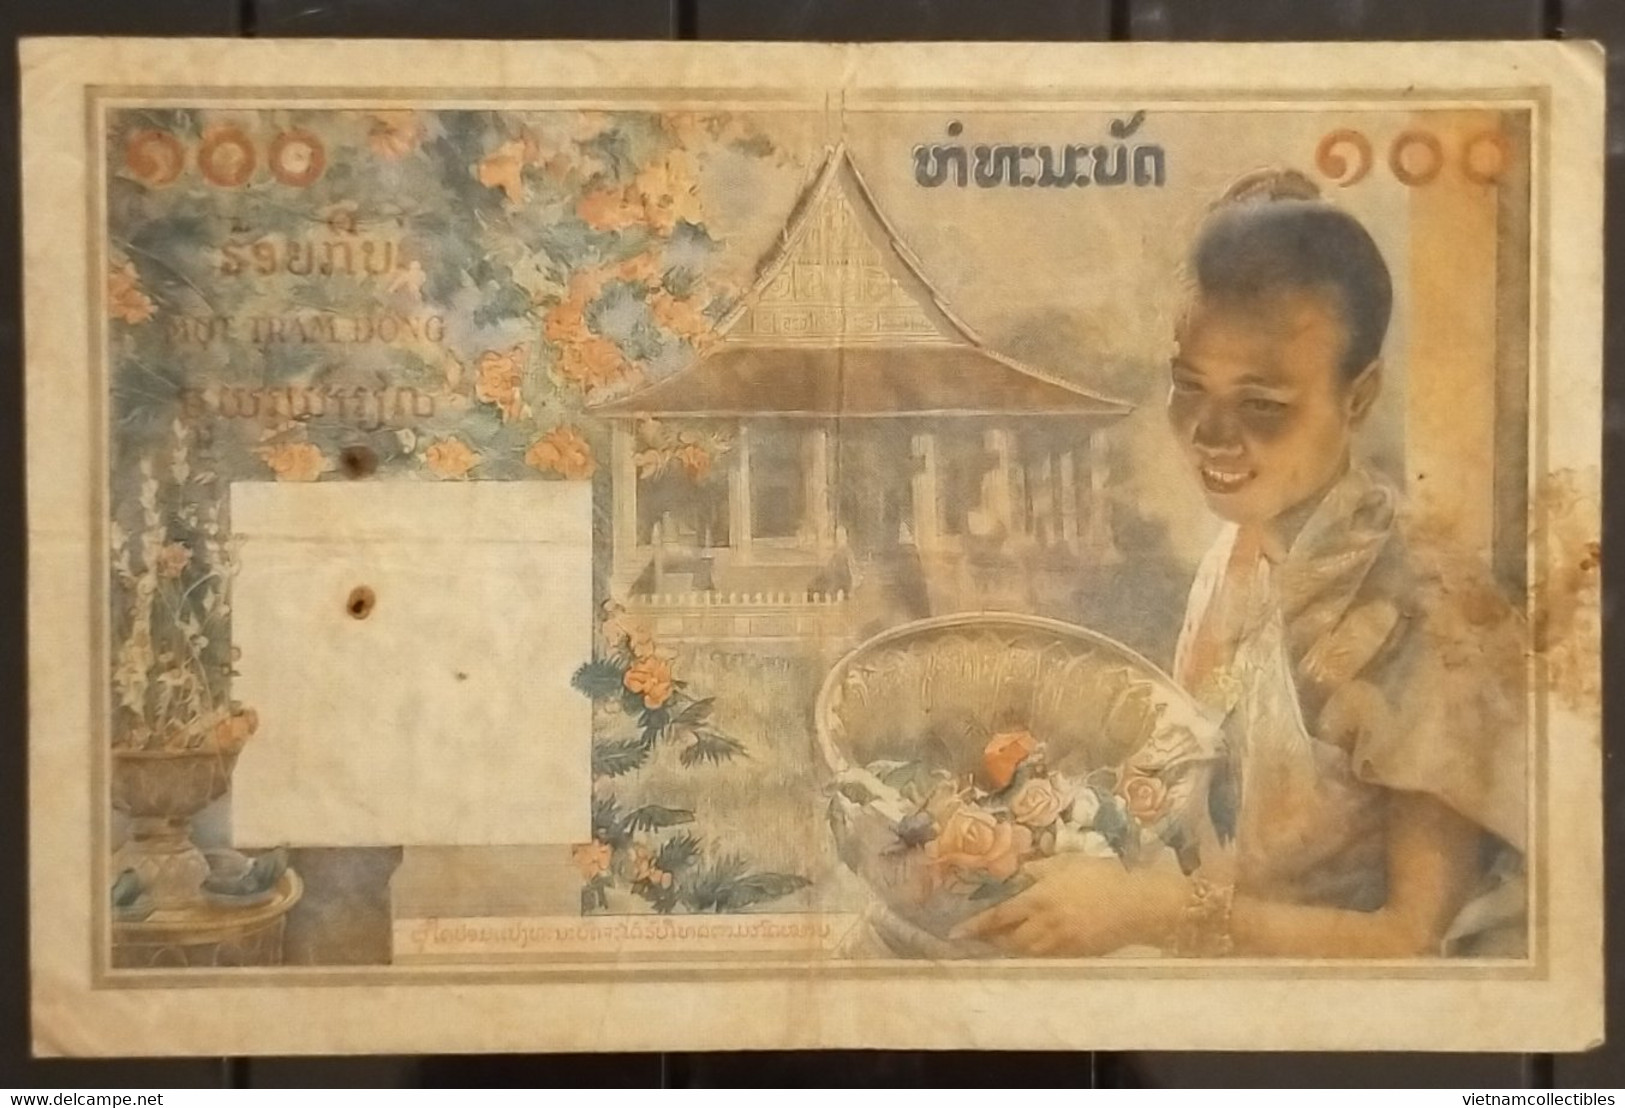 French Indochine Indochina Vietnam Viet Nam Laos Cambodia 100 Piastres VF Banknote Note 1954 - Pick # 103 / 02 Photos - Indochine